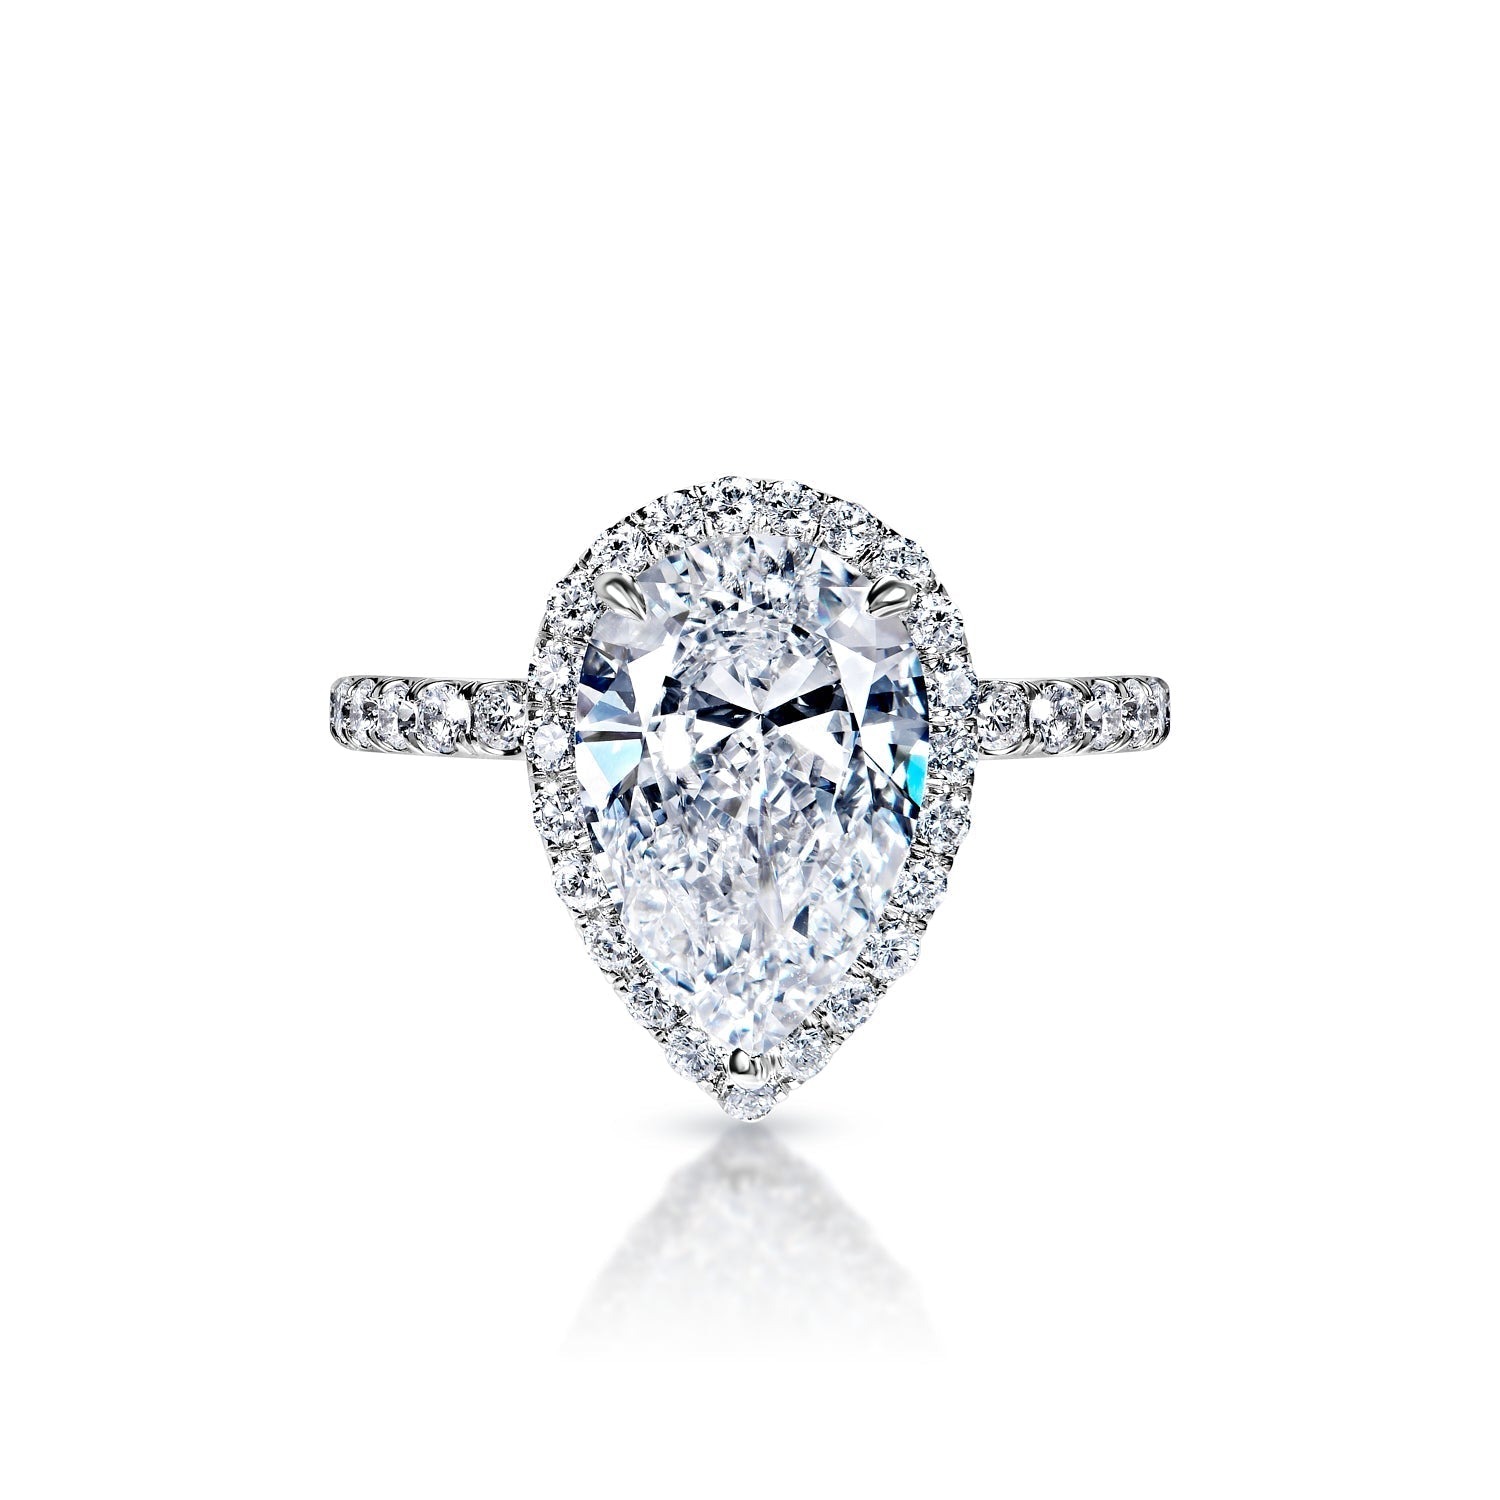 Sunny 4 Carat D VVS2 Pear Shape Diamond Engagement Ring in Platinum By Mike Nekta Front View